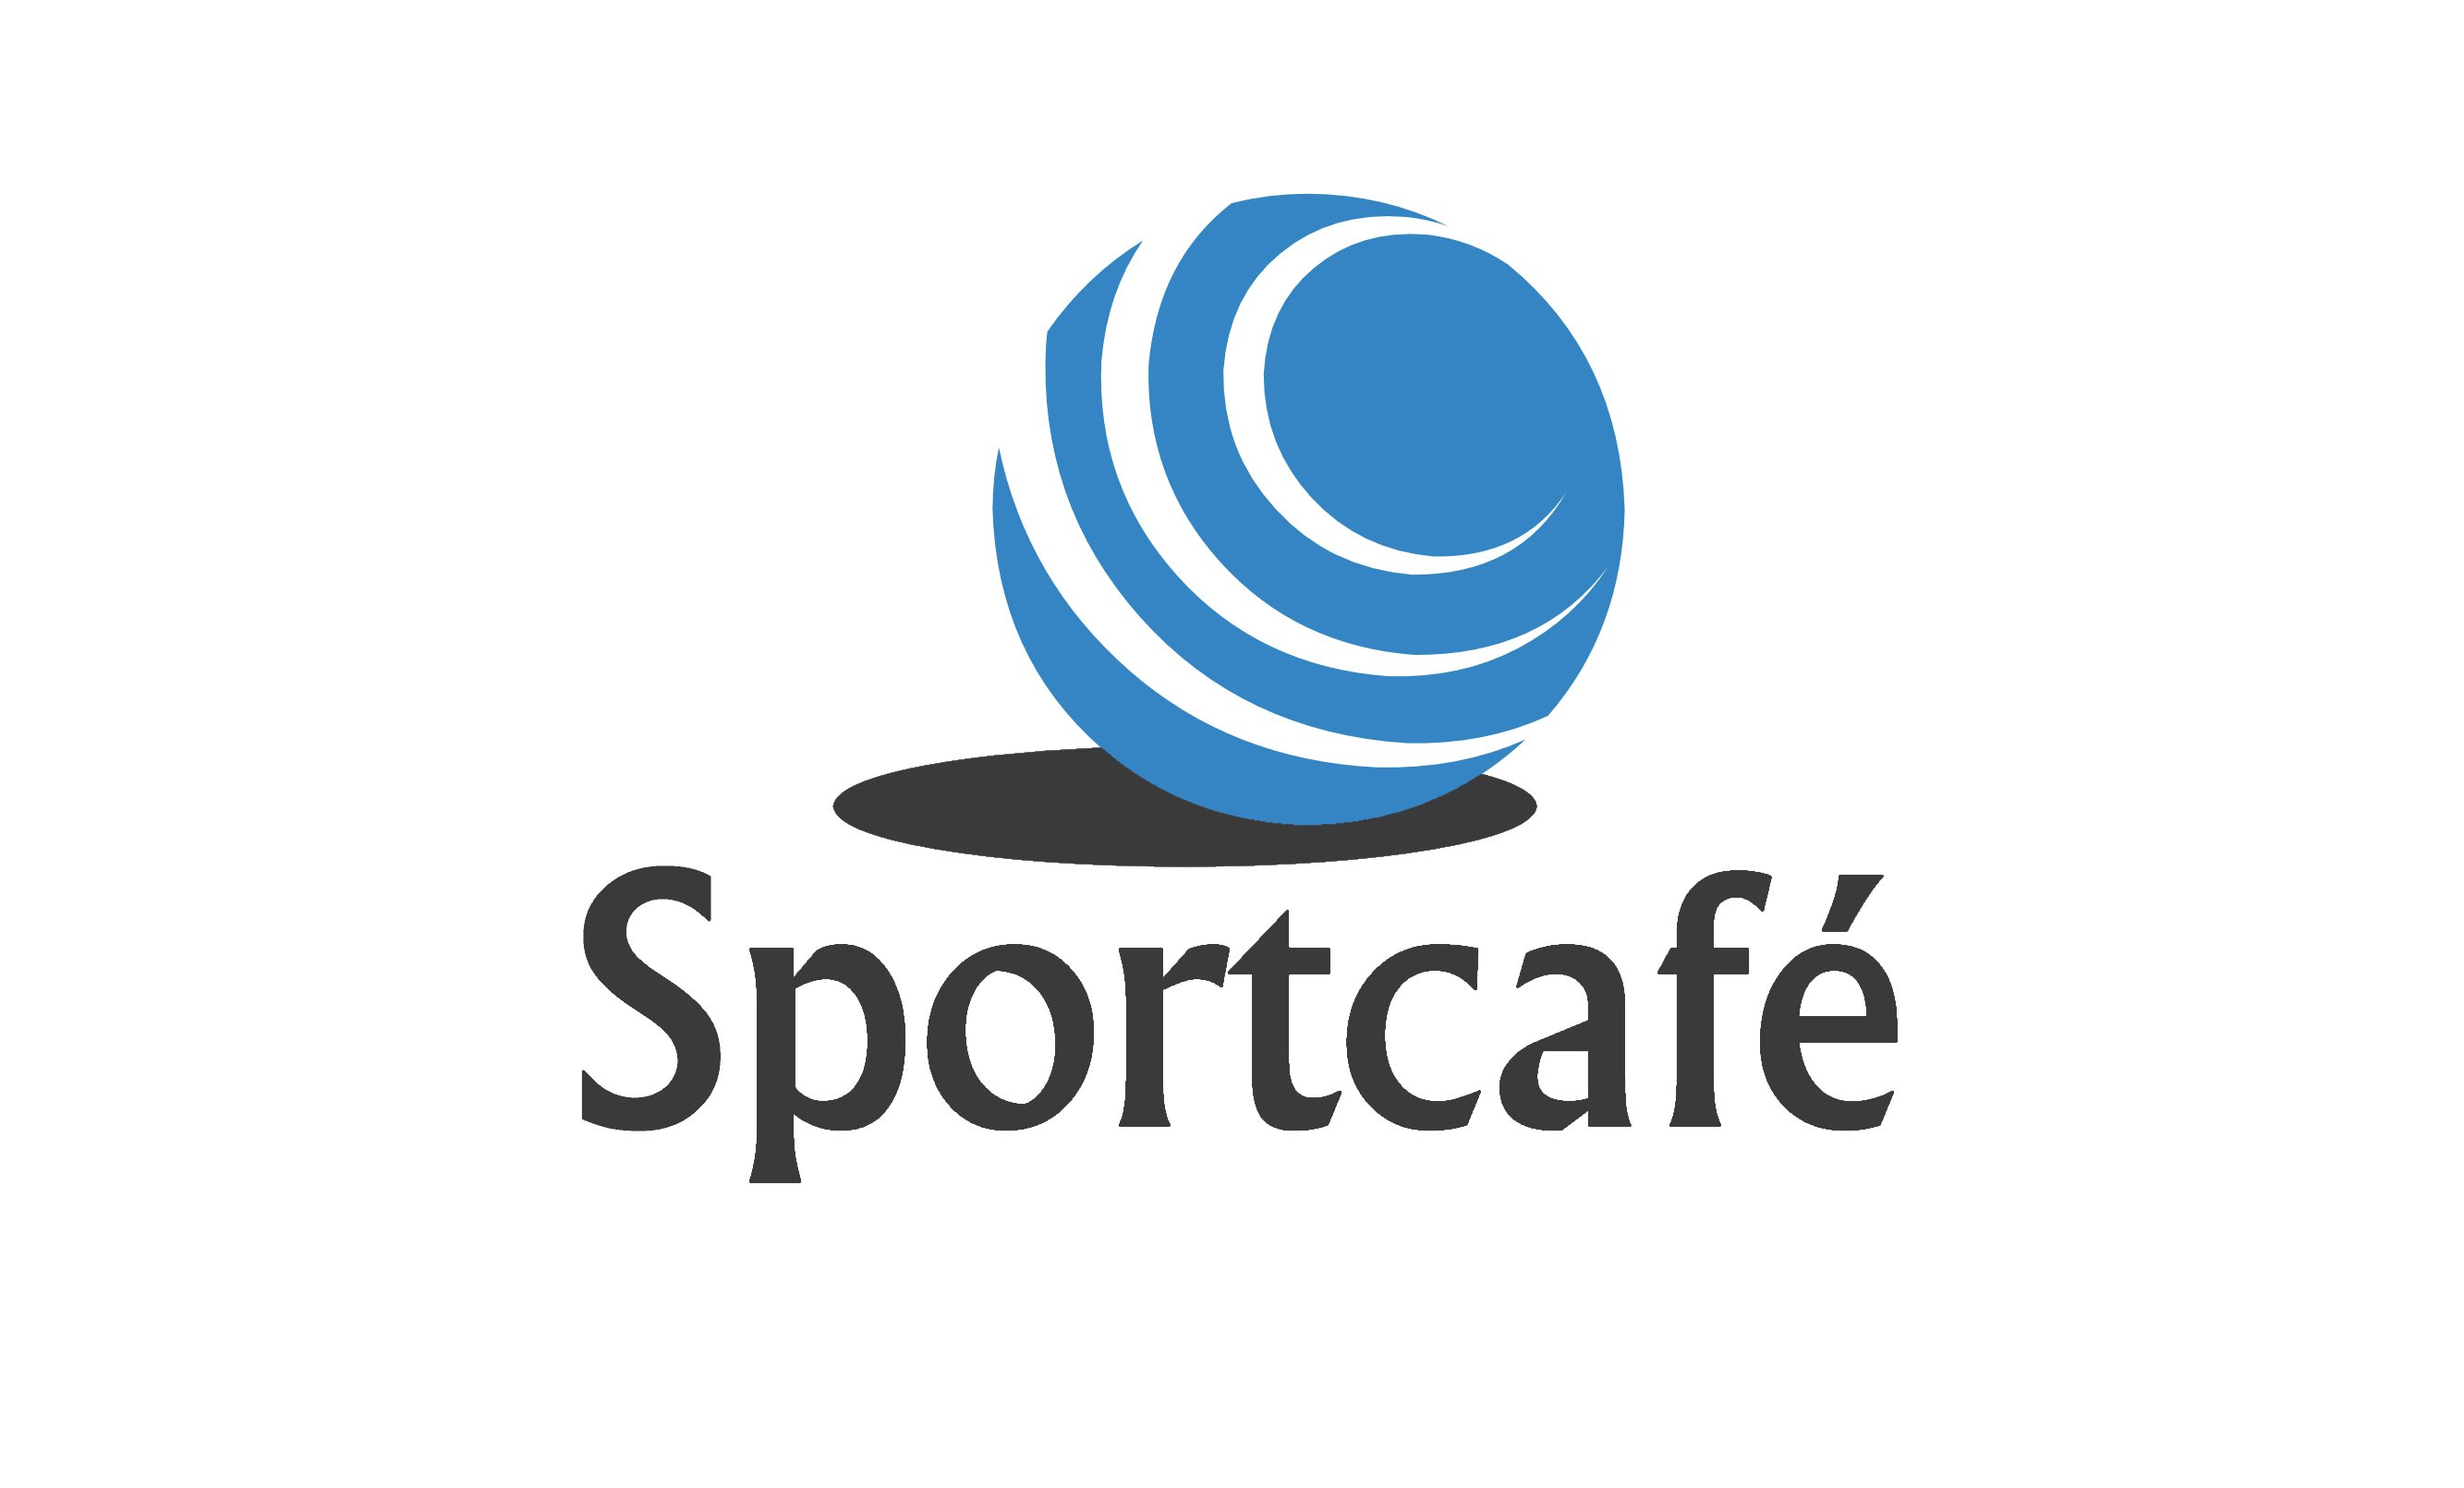 Sportcafé